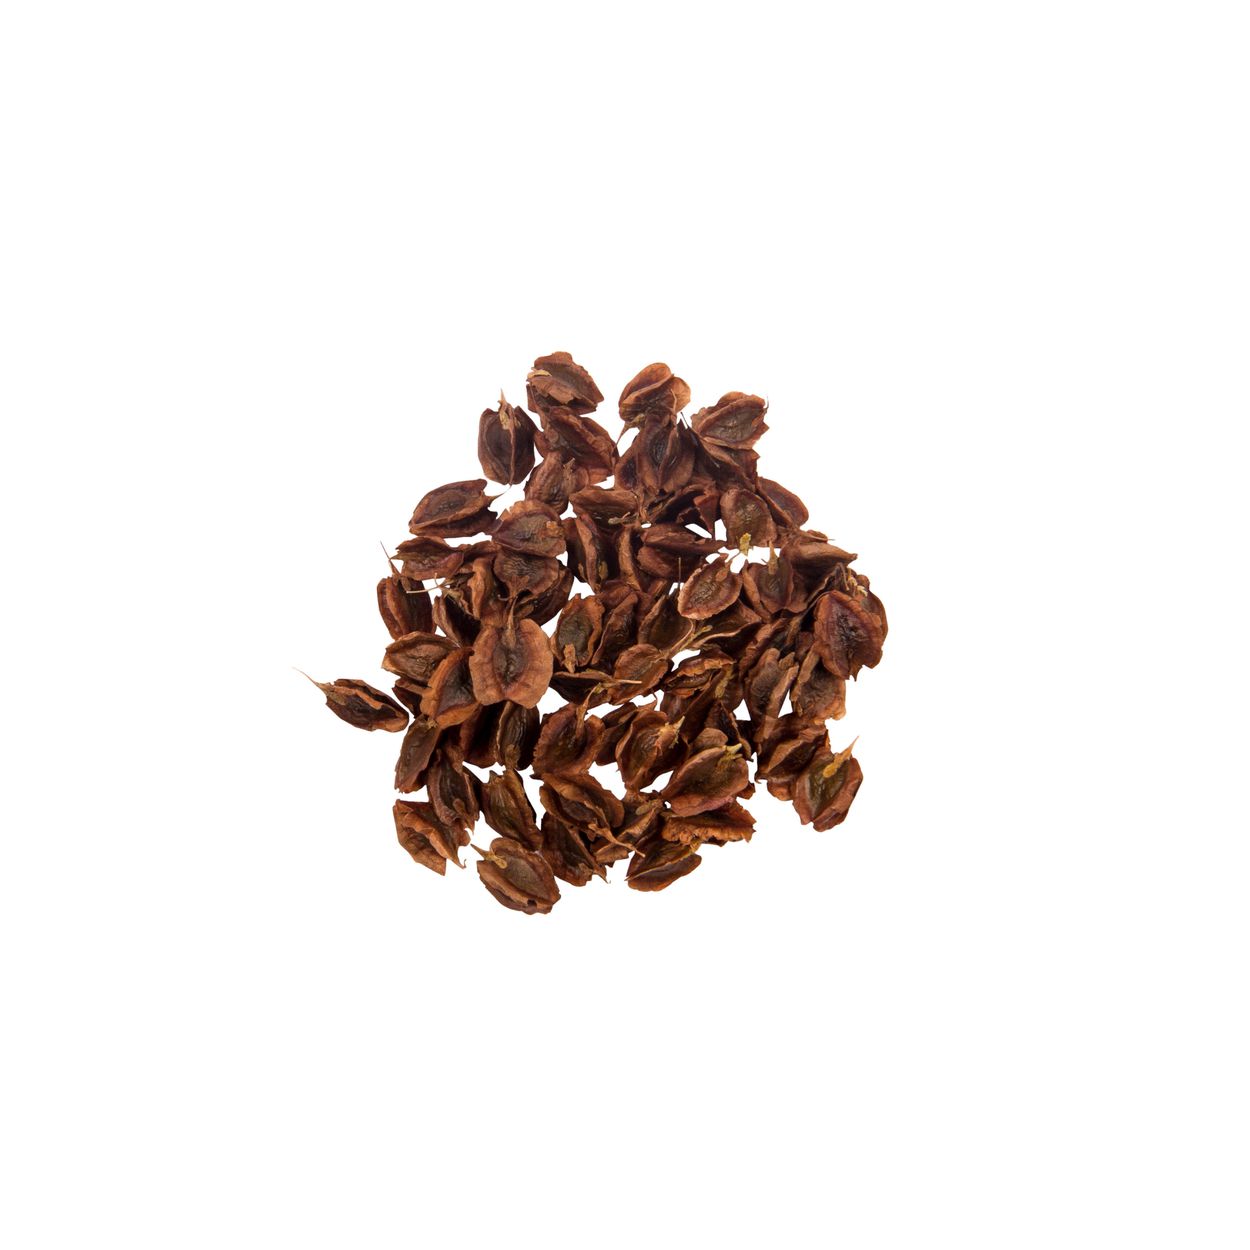 Brim Seed Co. - Victoria Rhubarb Heirloom Seed